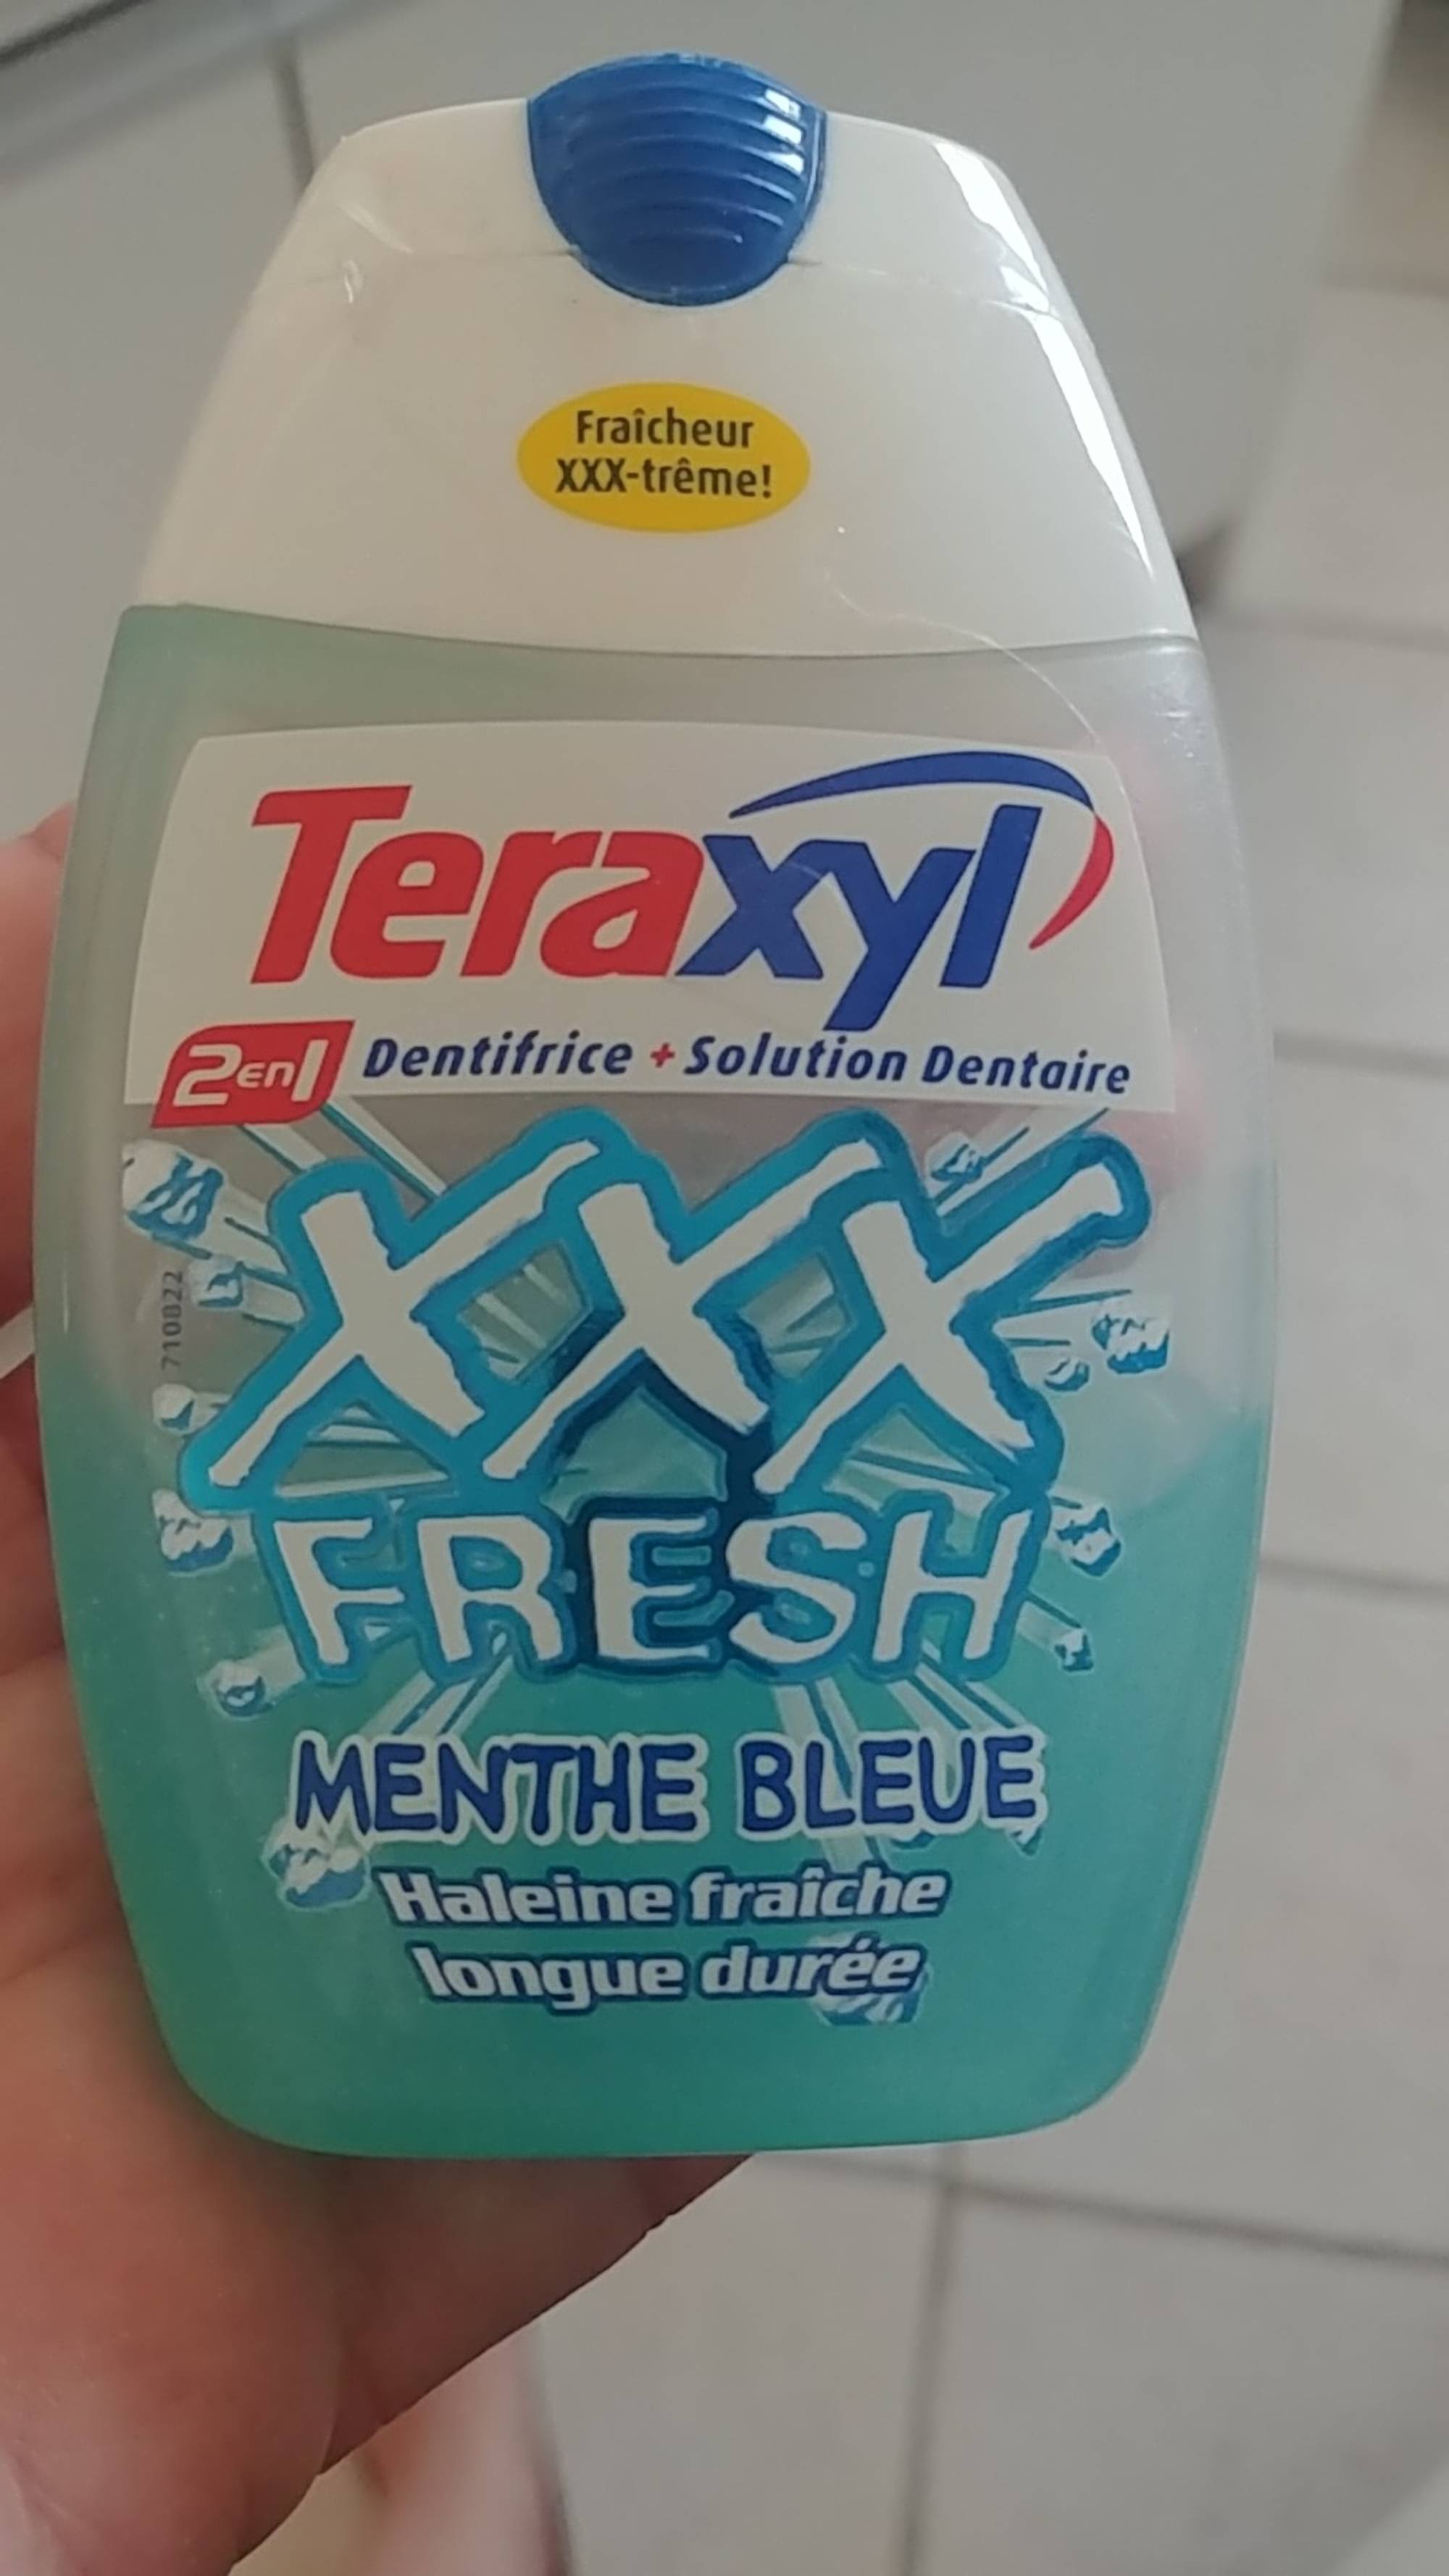 TERAXYL - XXX fresh menthe bleue - 2en1 Dentifrice + solution dentaire